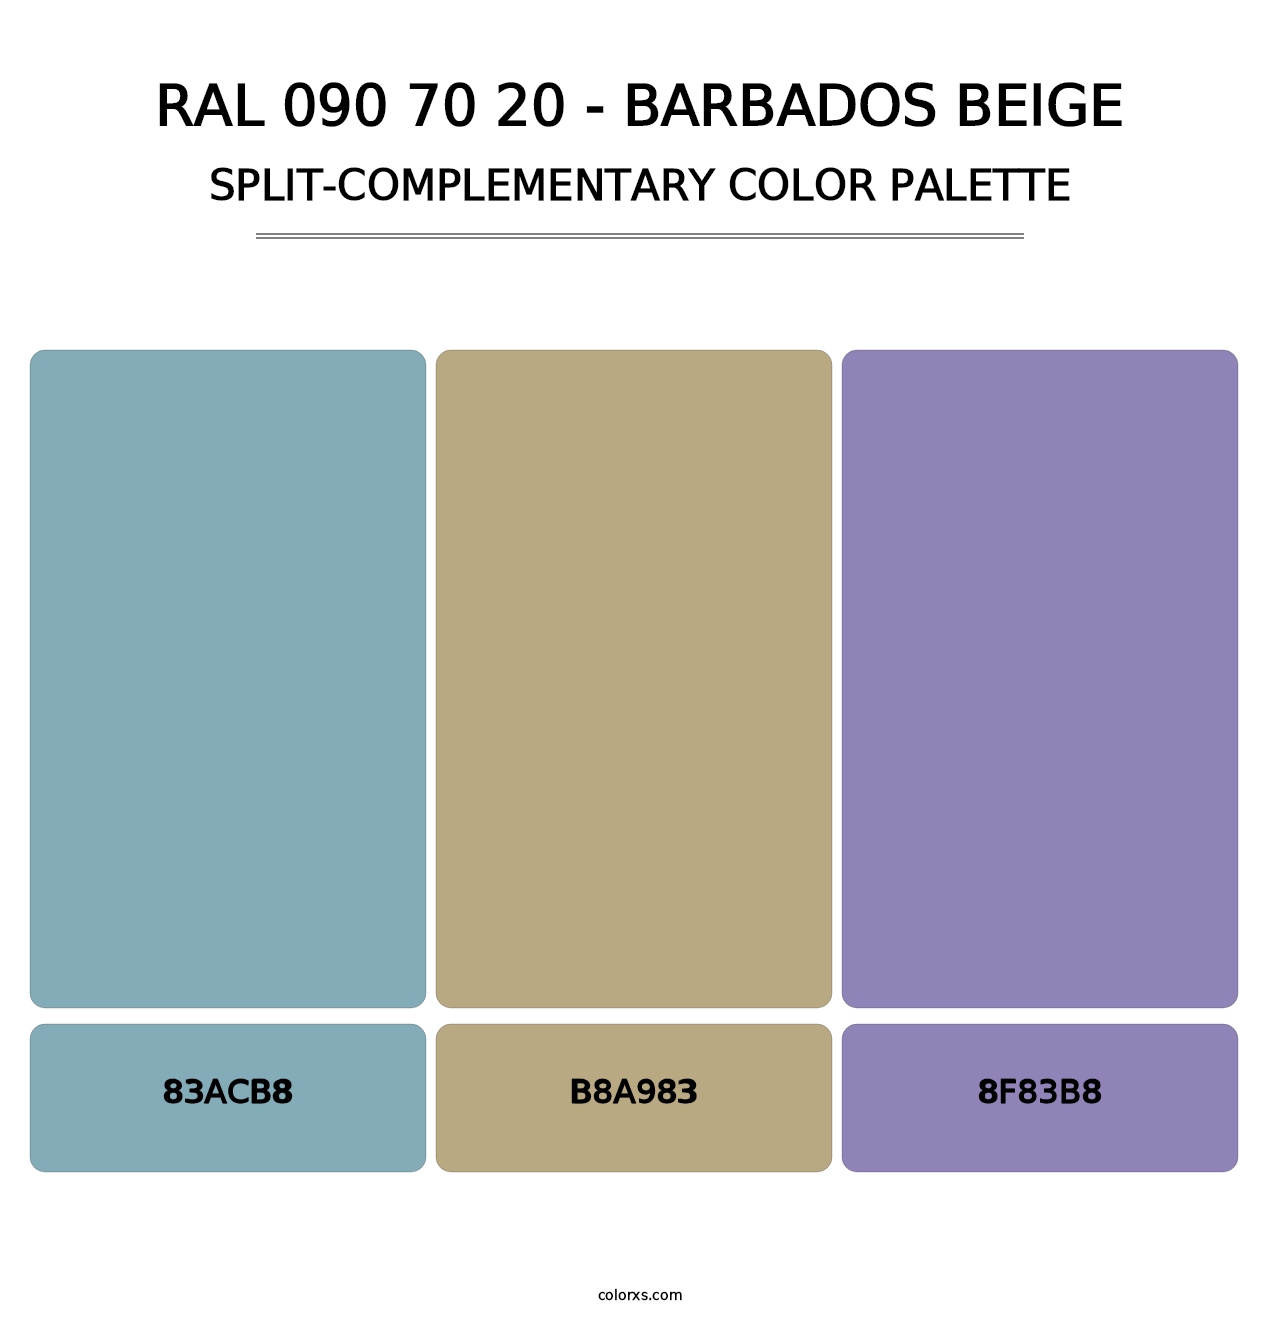 RAL 090 70 20 - Barbados Beige - Split-Complementary Color Palette